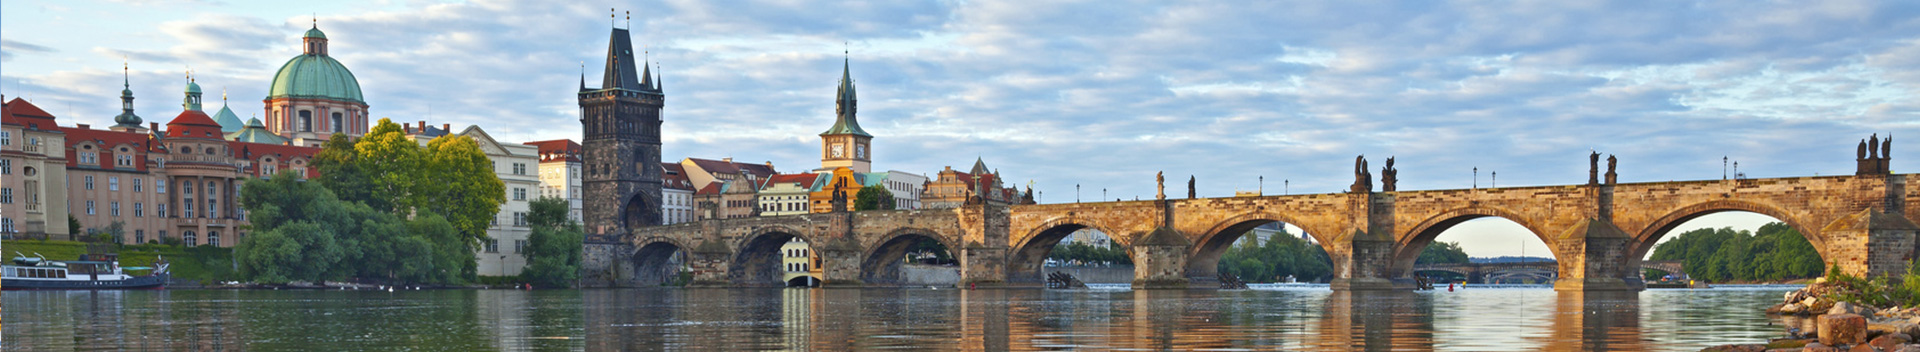 Tours to Czech Castles